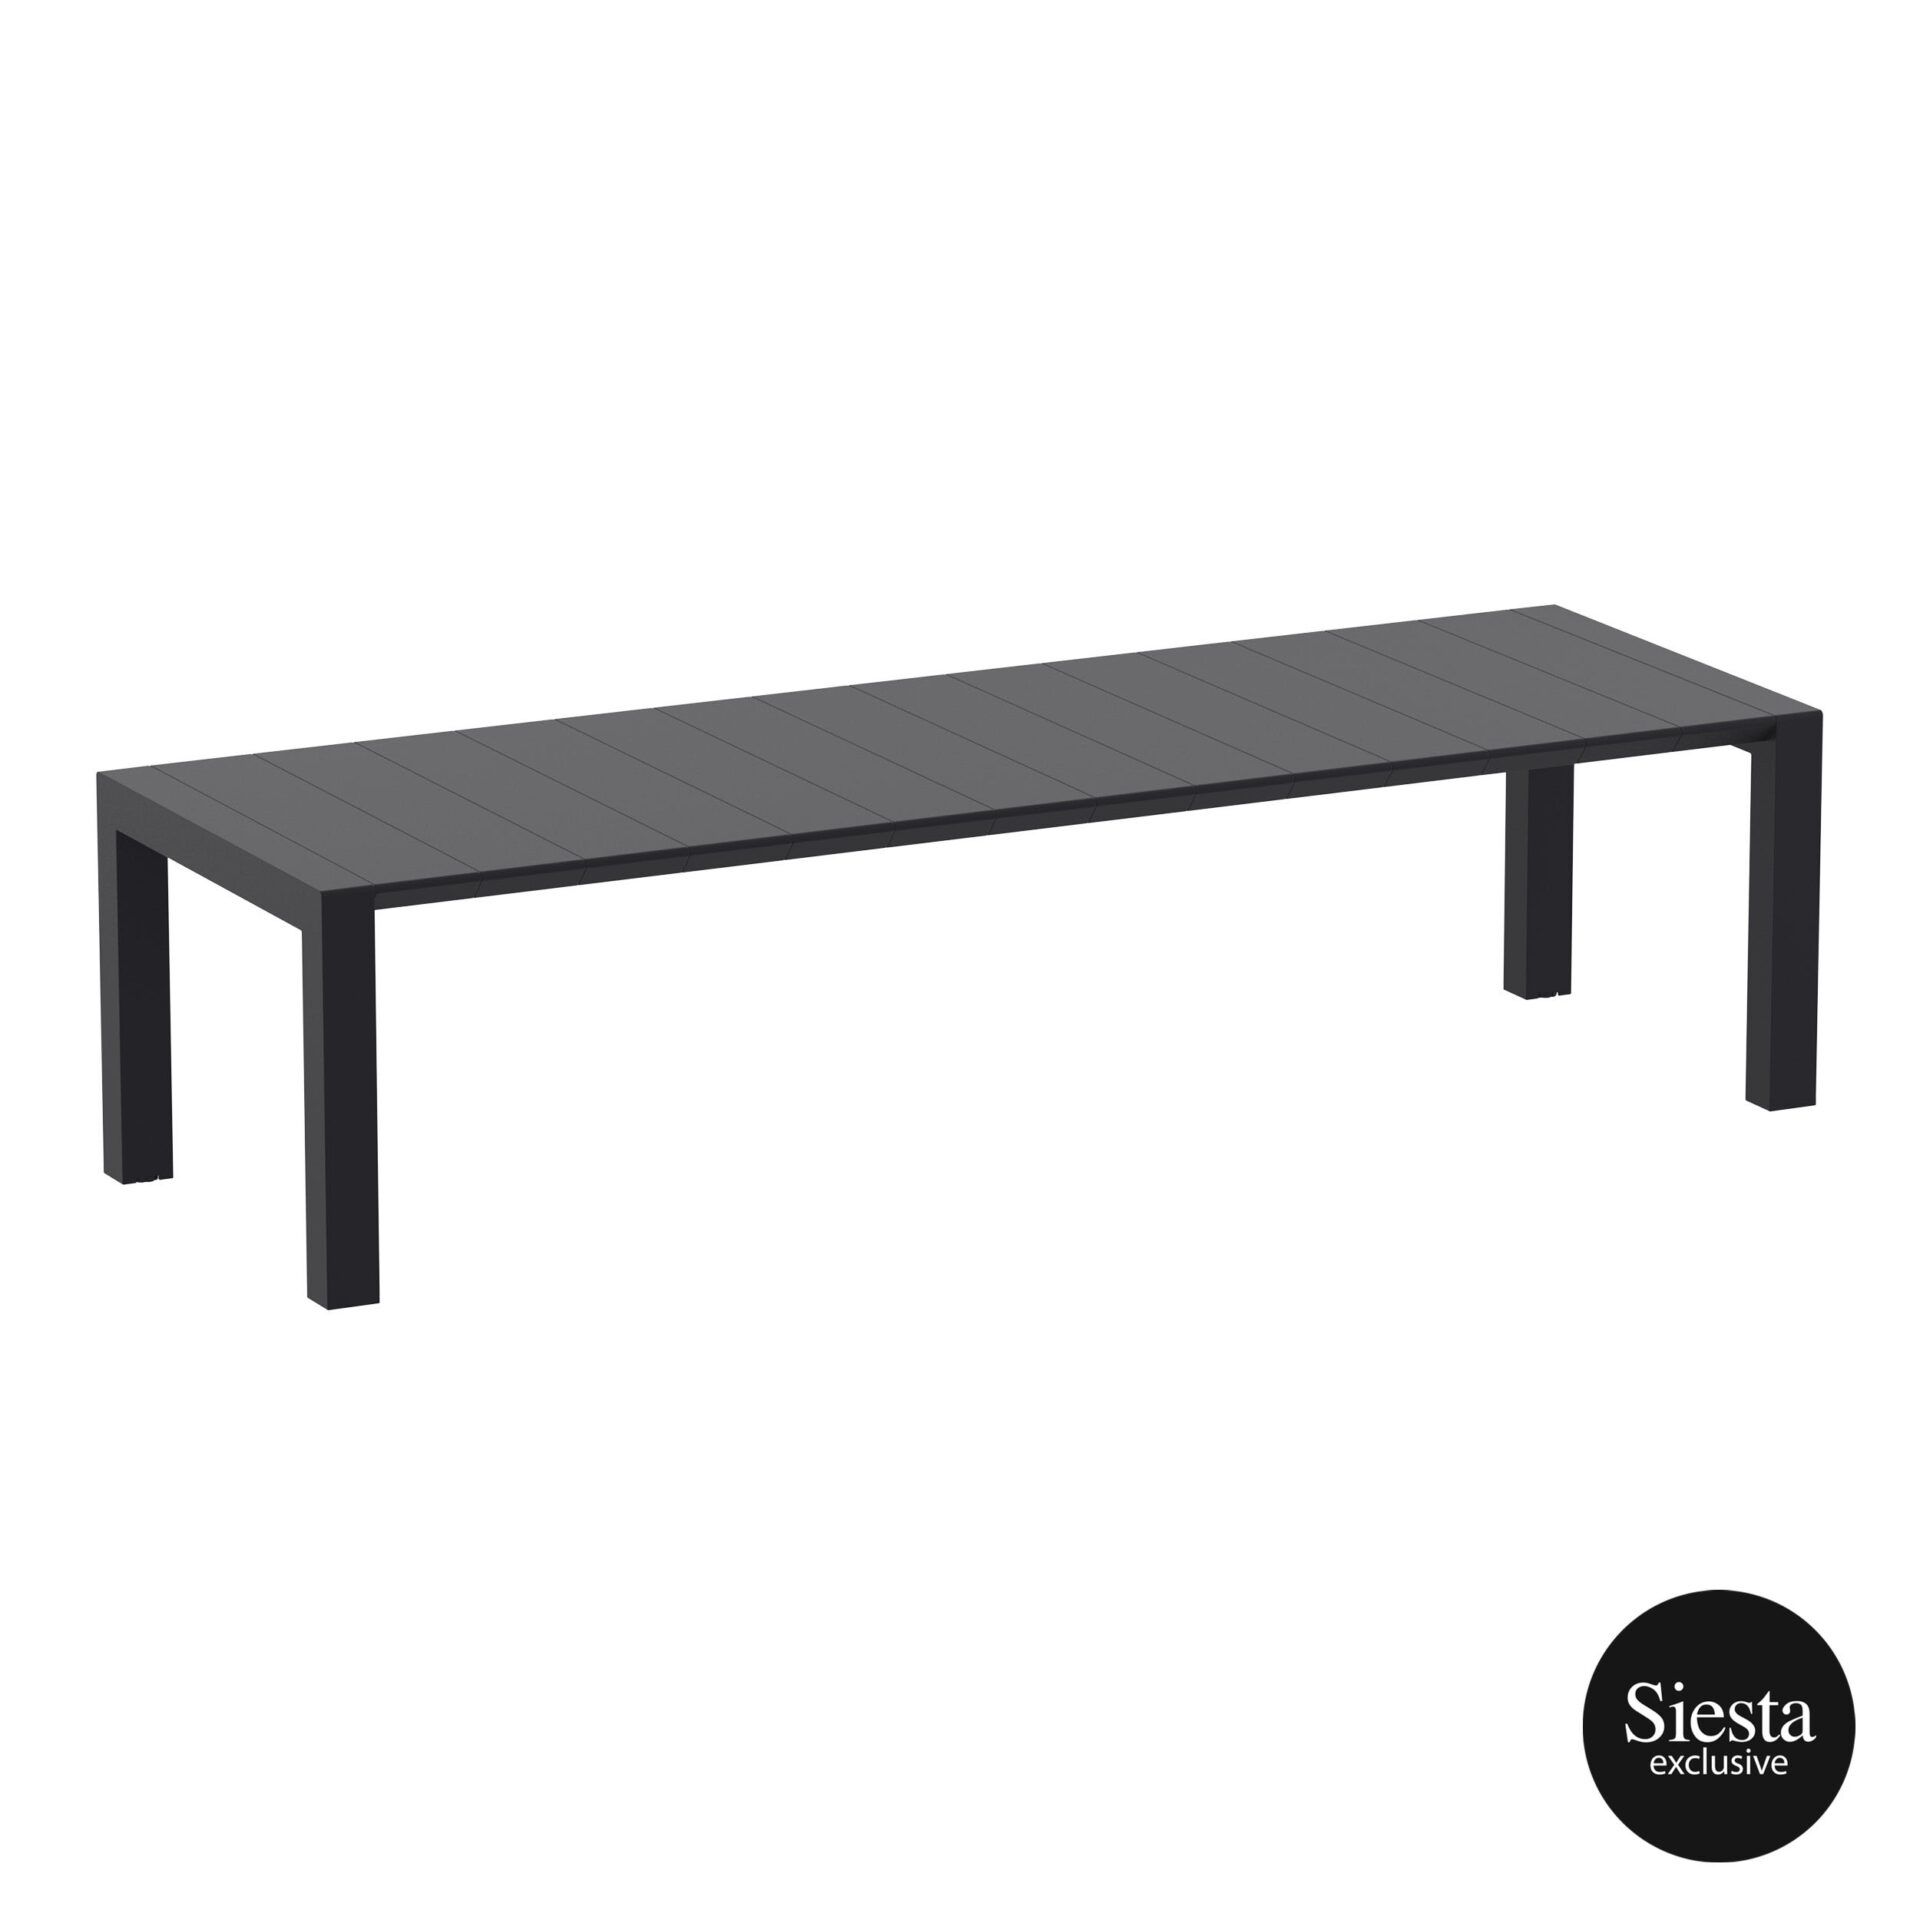 002 vegas table xl 300 black front side